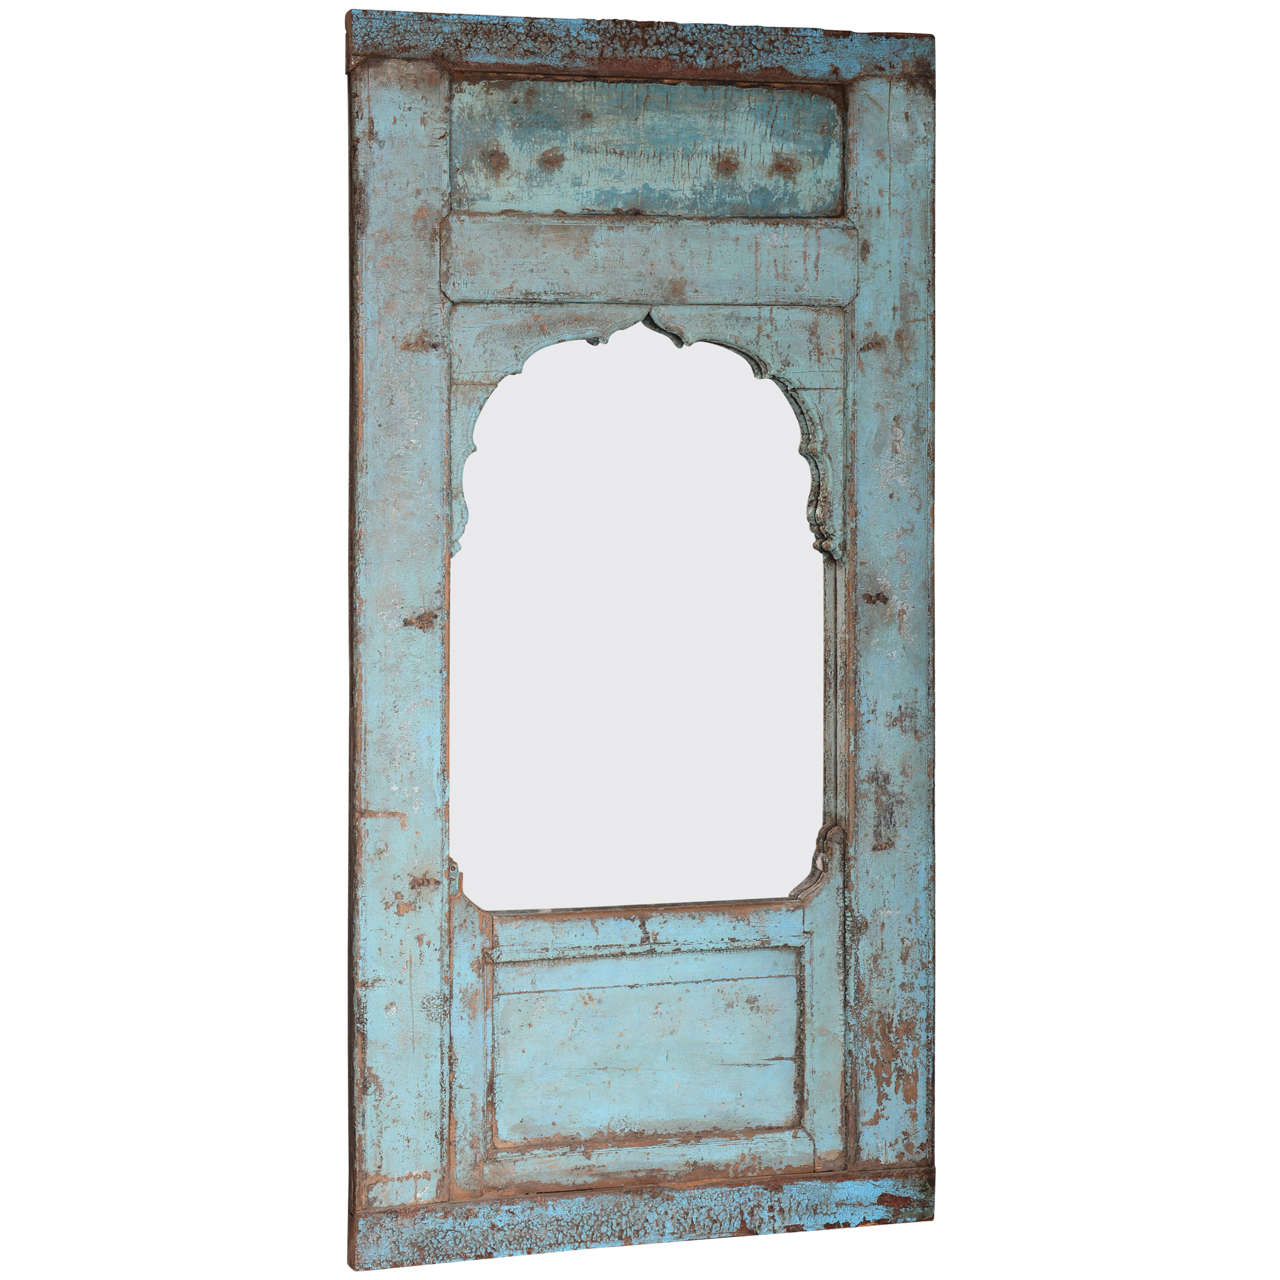 SALE! SALE! SALE!Antique Door Turquoise, full length Java Enchanting, dramatic For Sale